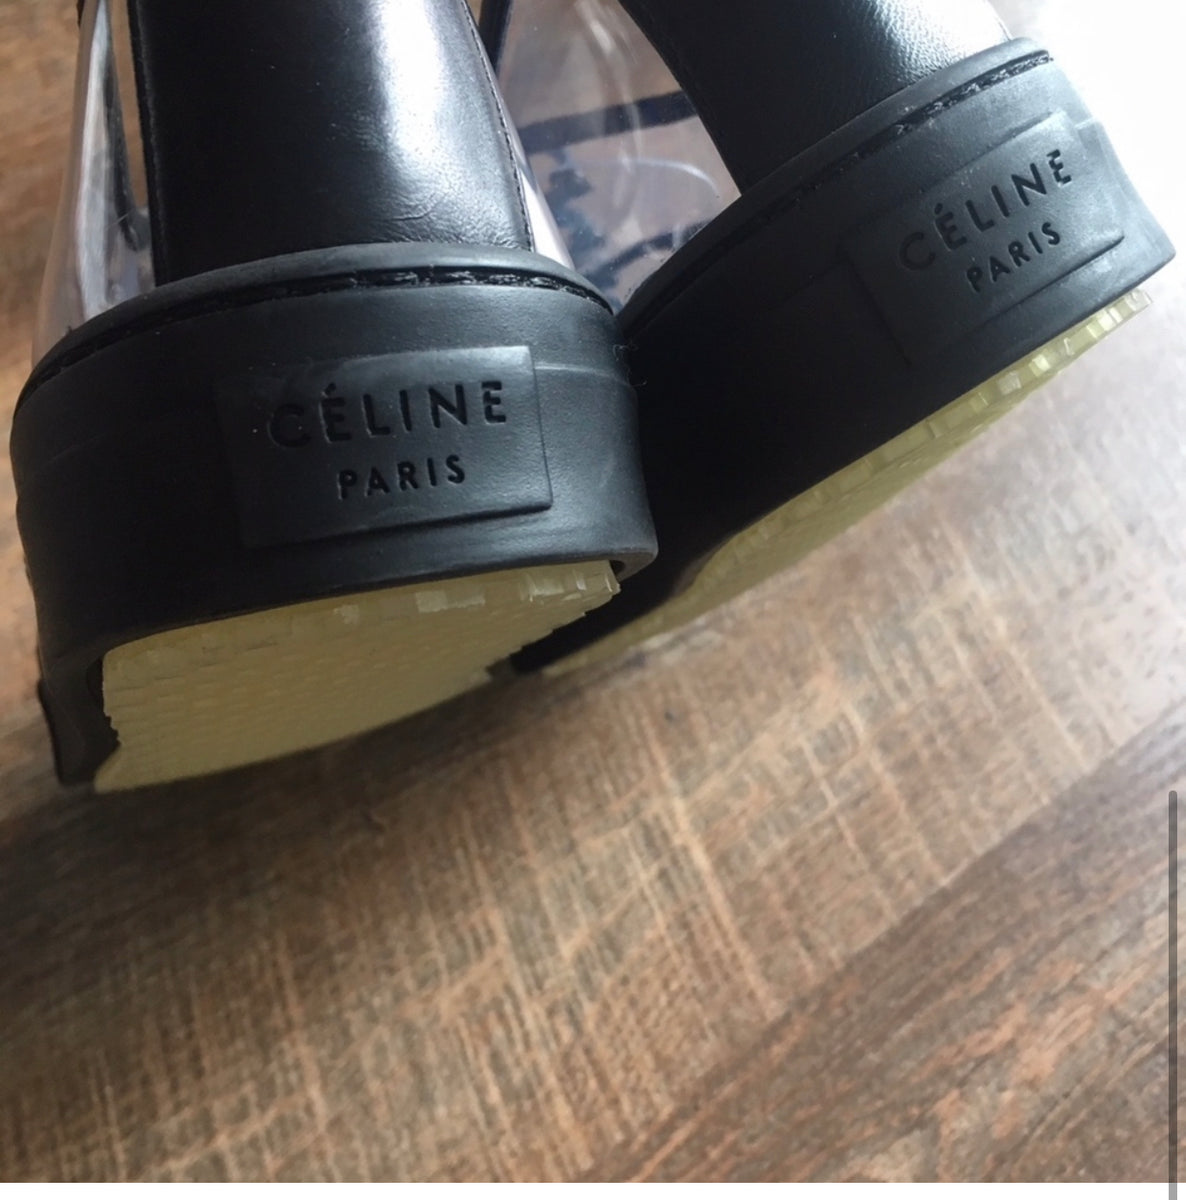 Celine Phoebe Philo 'Delivery' Sneakers